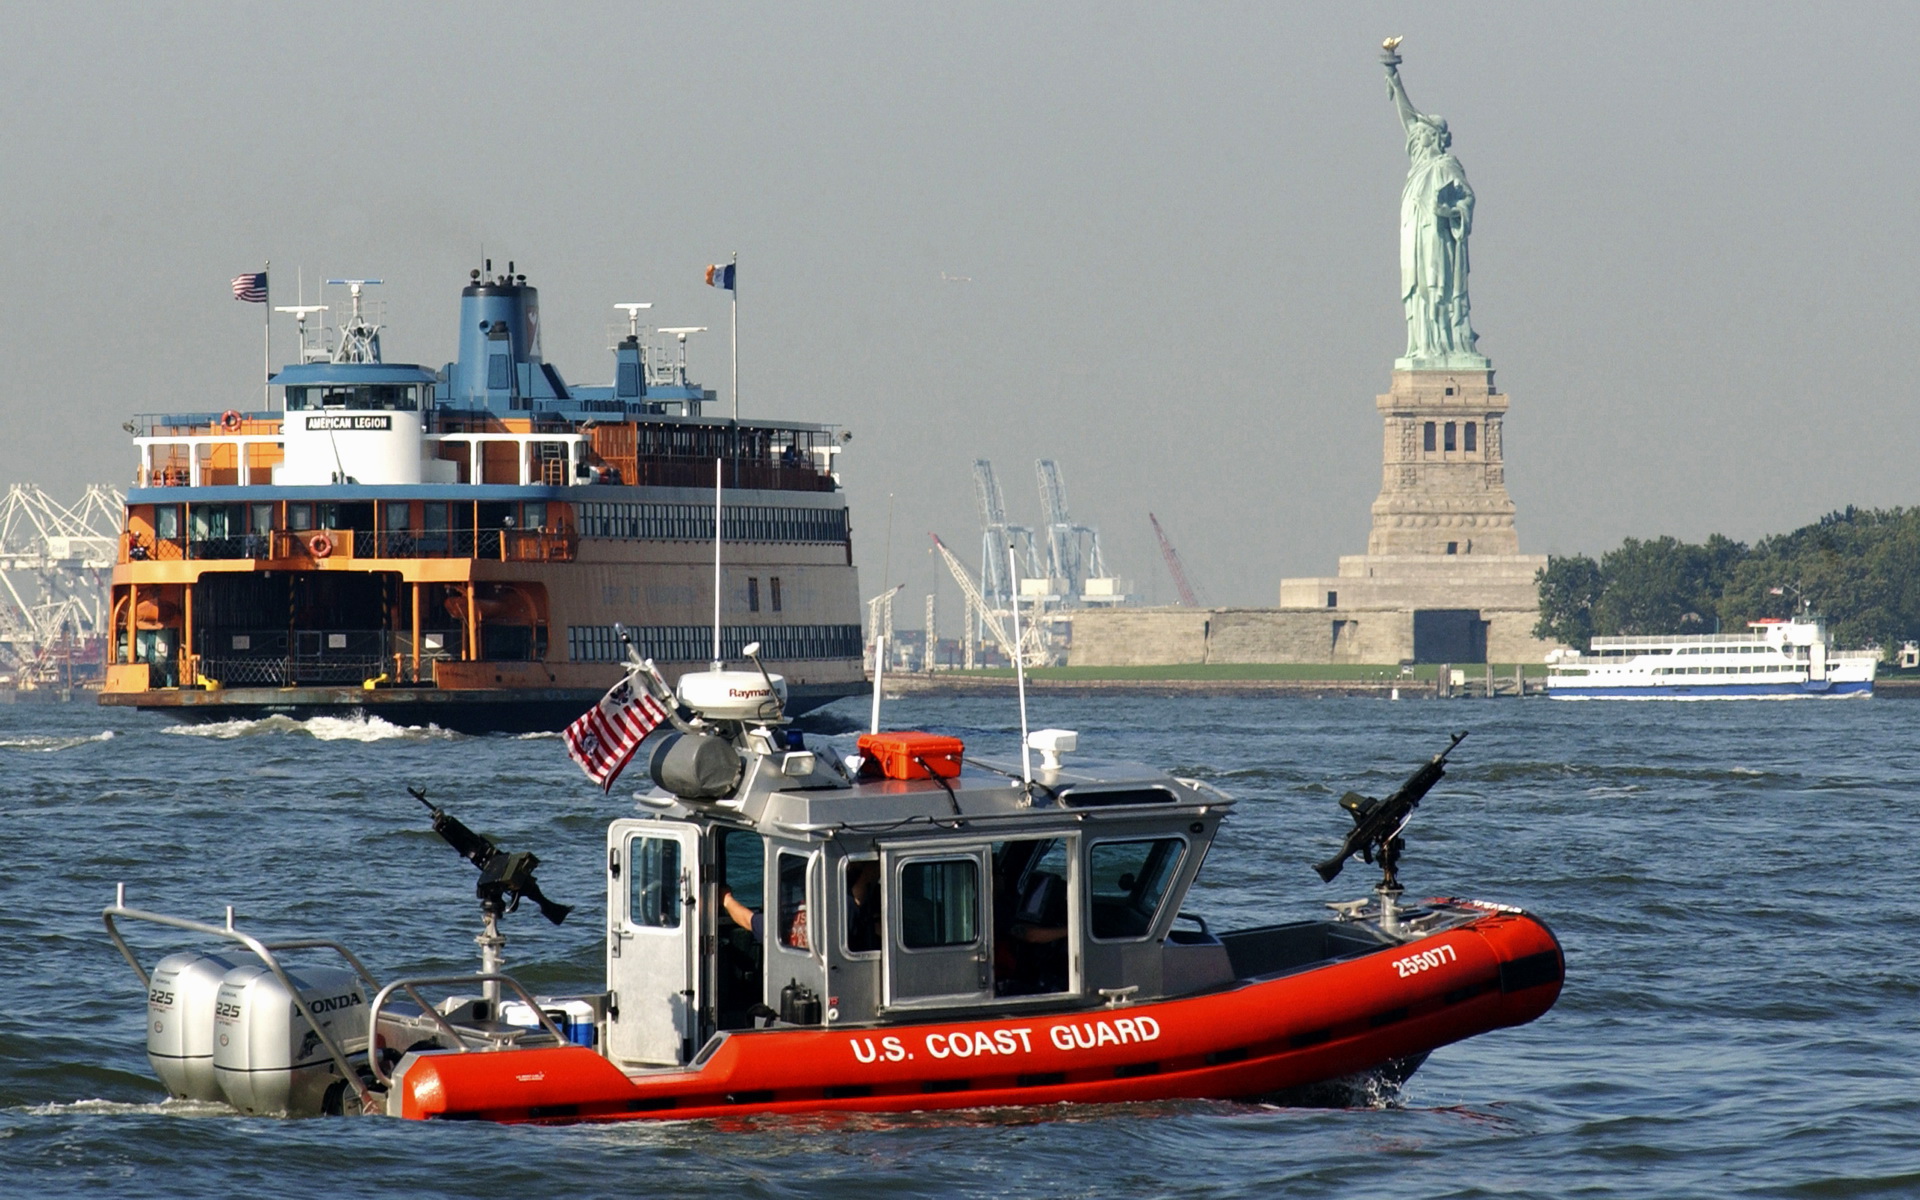 coast guard wallpaper,vehicle,water transportation,boat,tugboat,watercraft